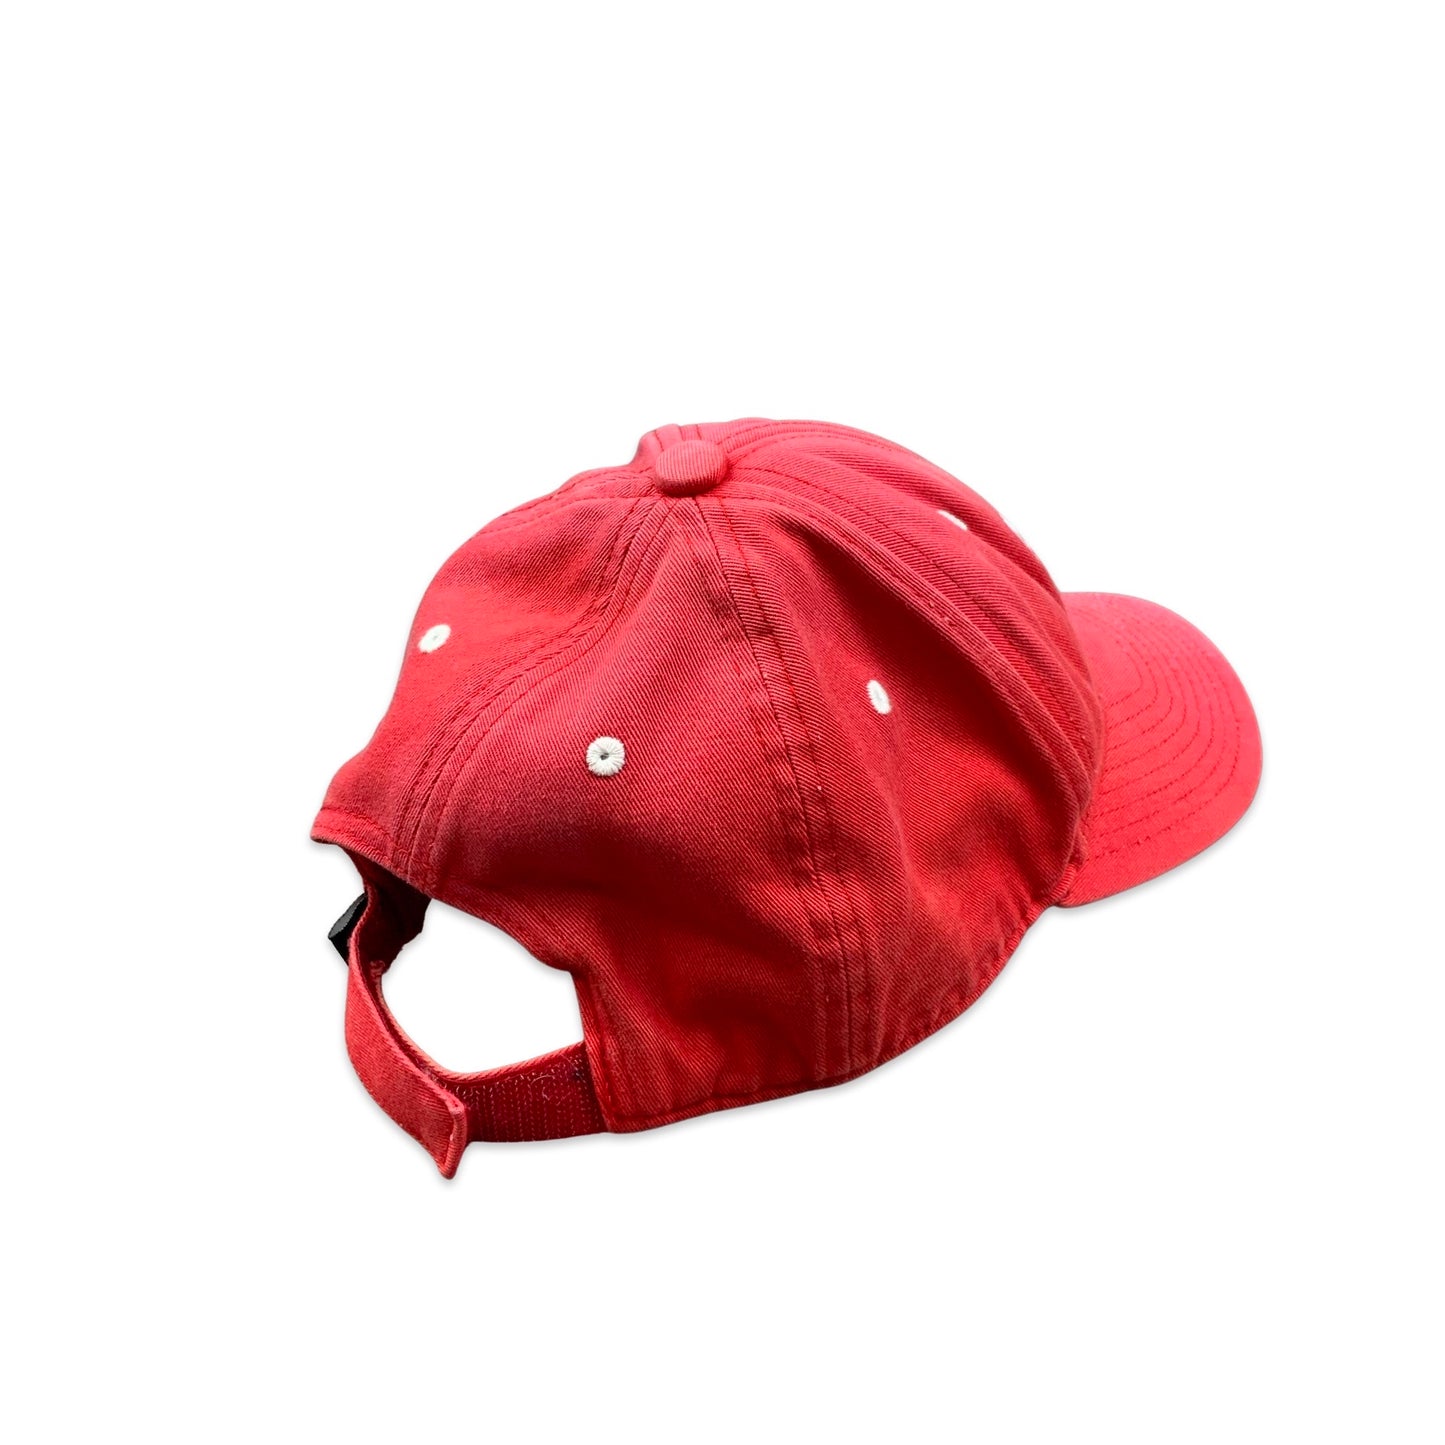 Puma Red Baseball Cap